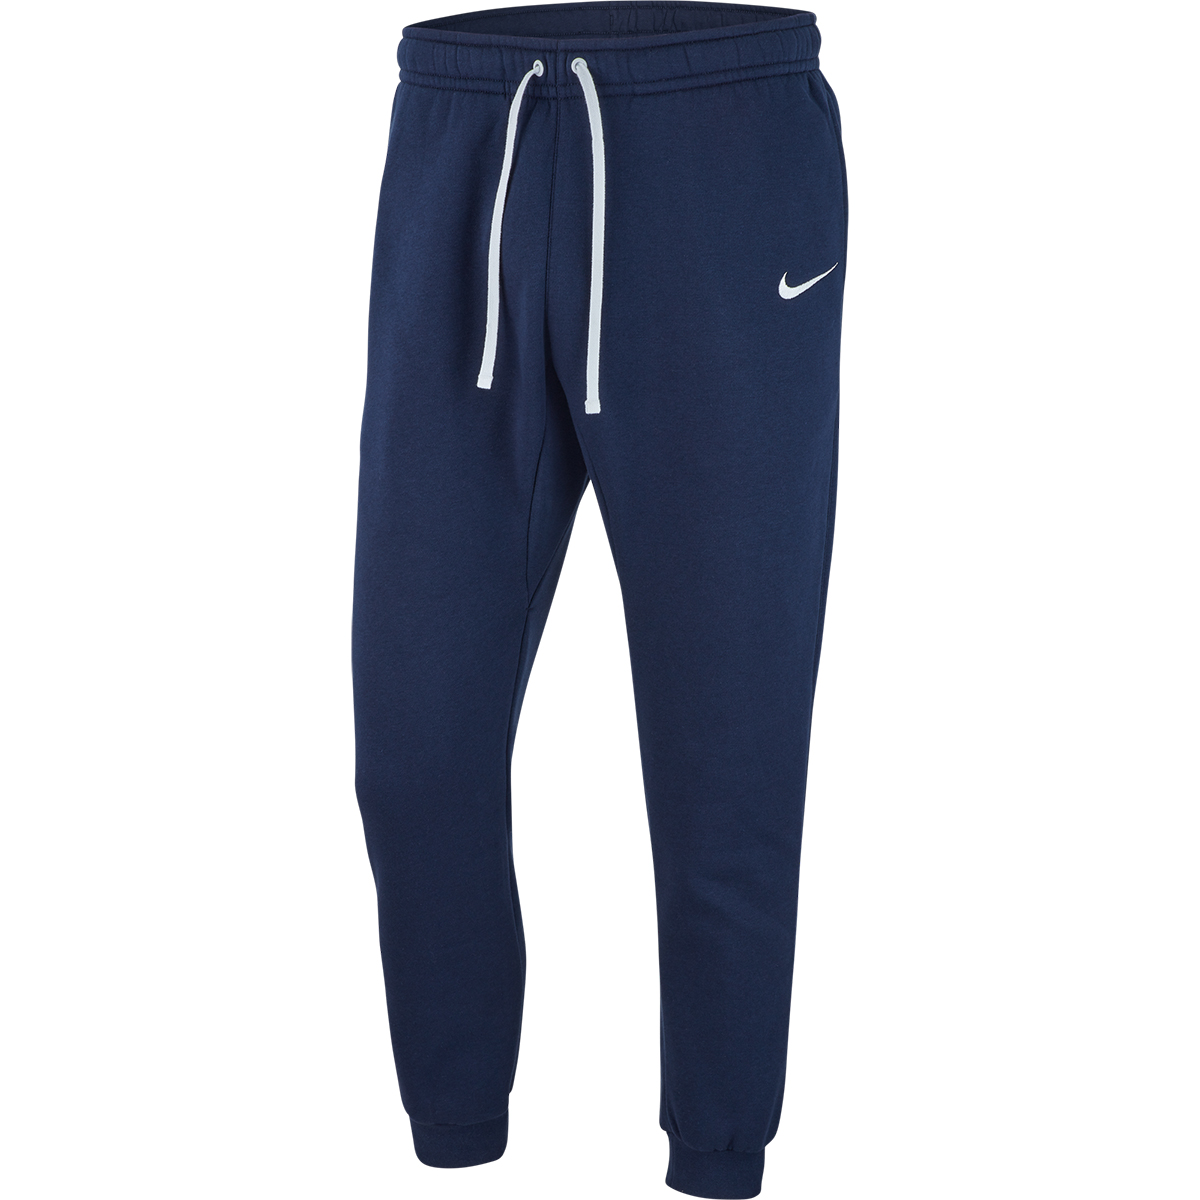 Nike Herren Trainingshose TEAM CLUB 19 Pants blau Jogginghose